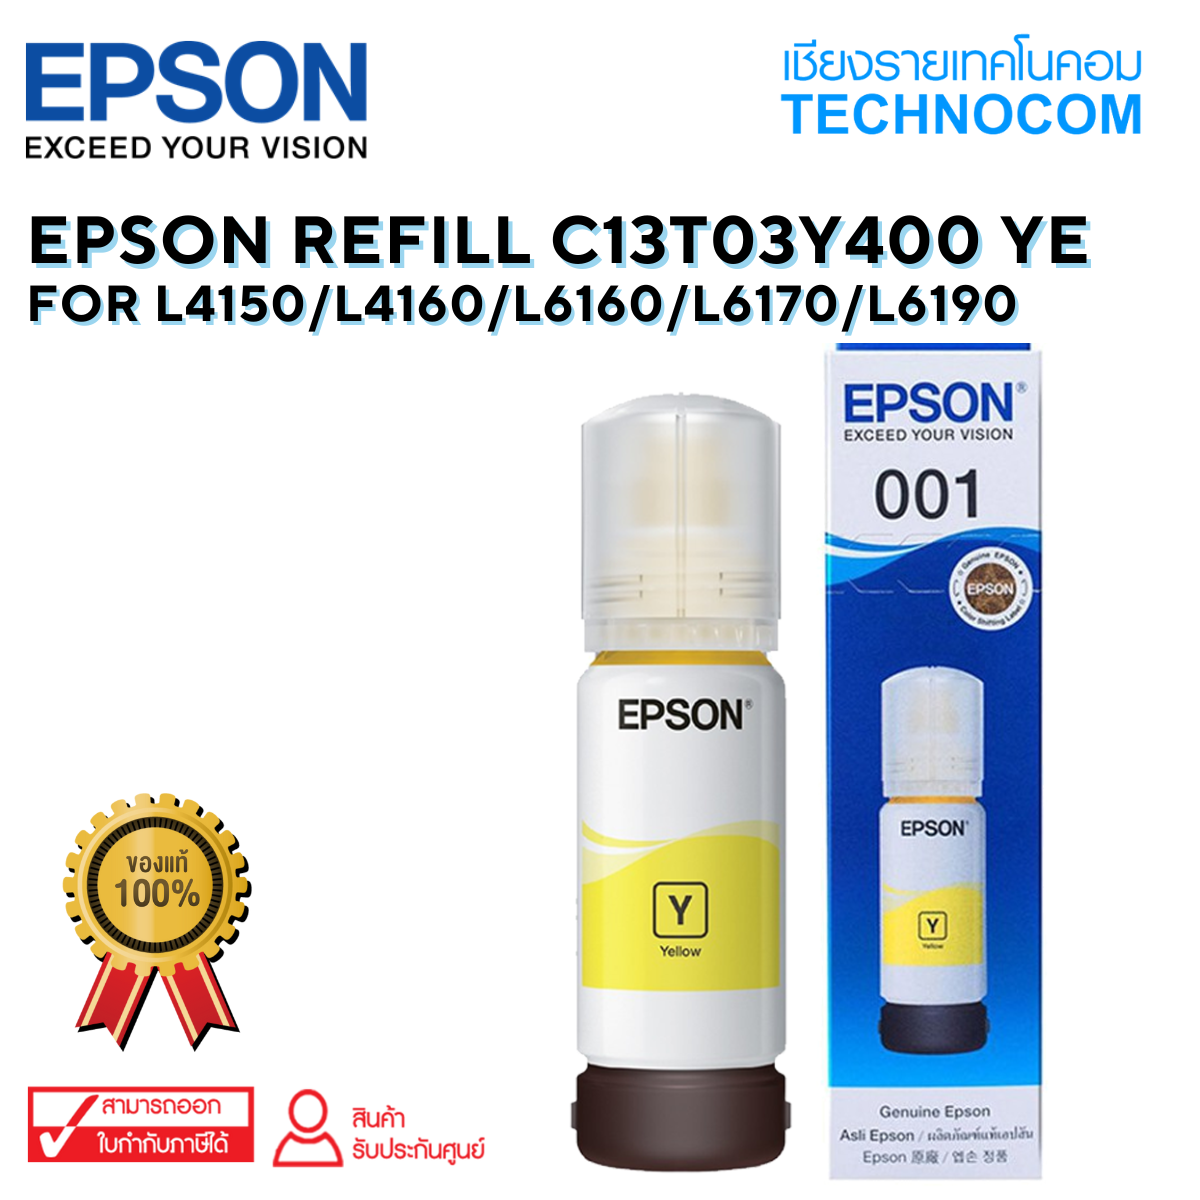 EPSON REFILL C13T03Y400 YE For L4150/L4160/L6160/L6170/L6190